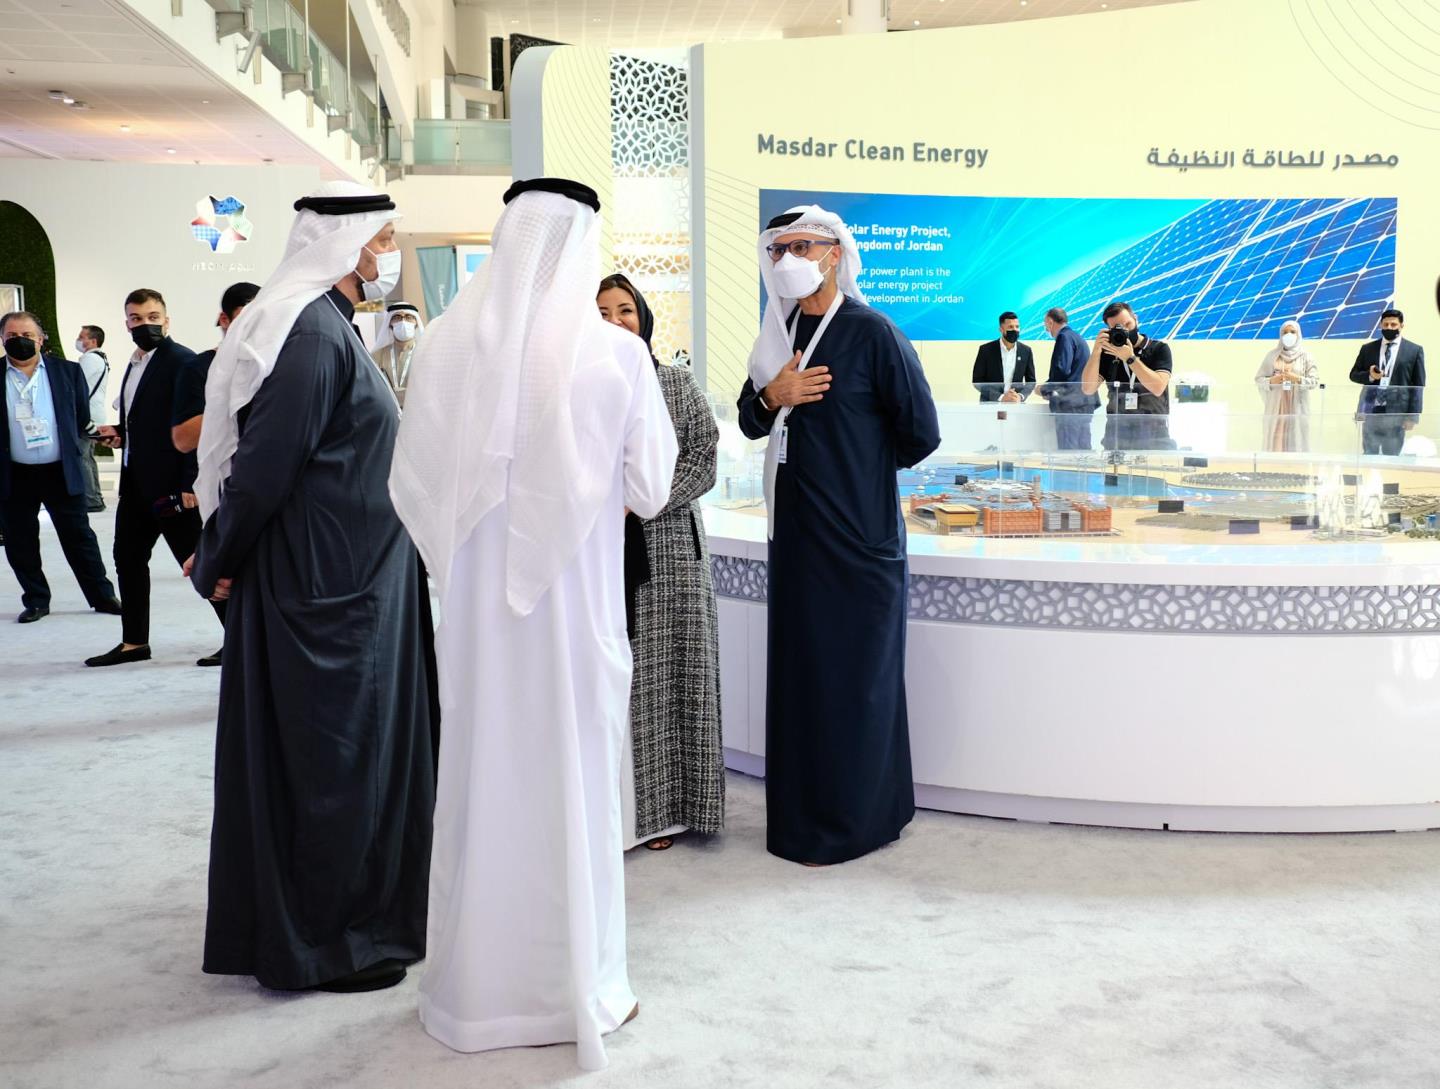 Network Solutions Companies in UAE